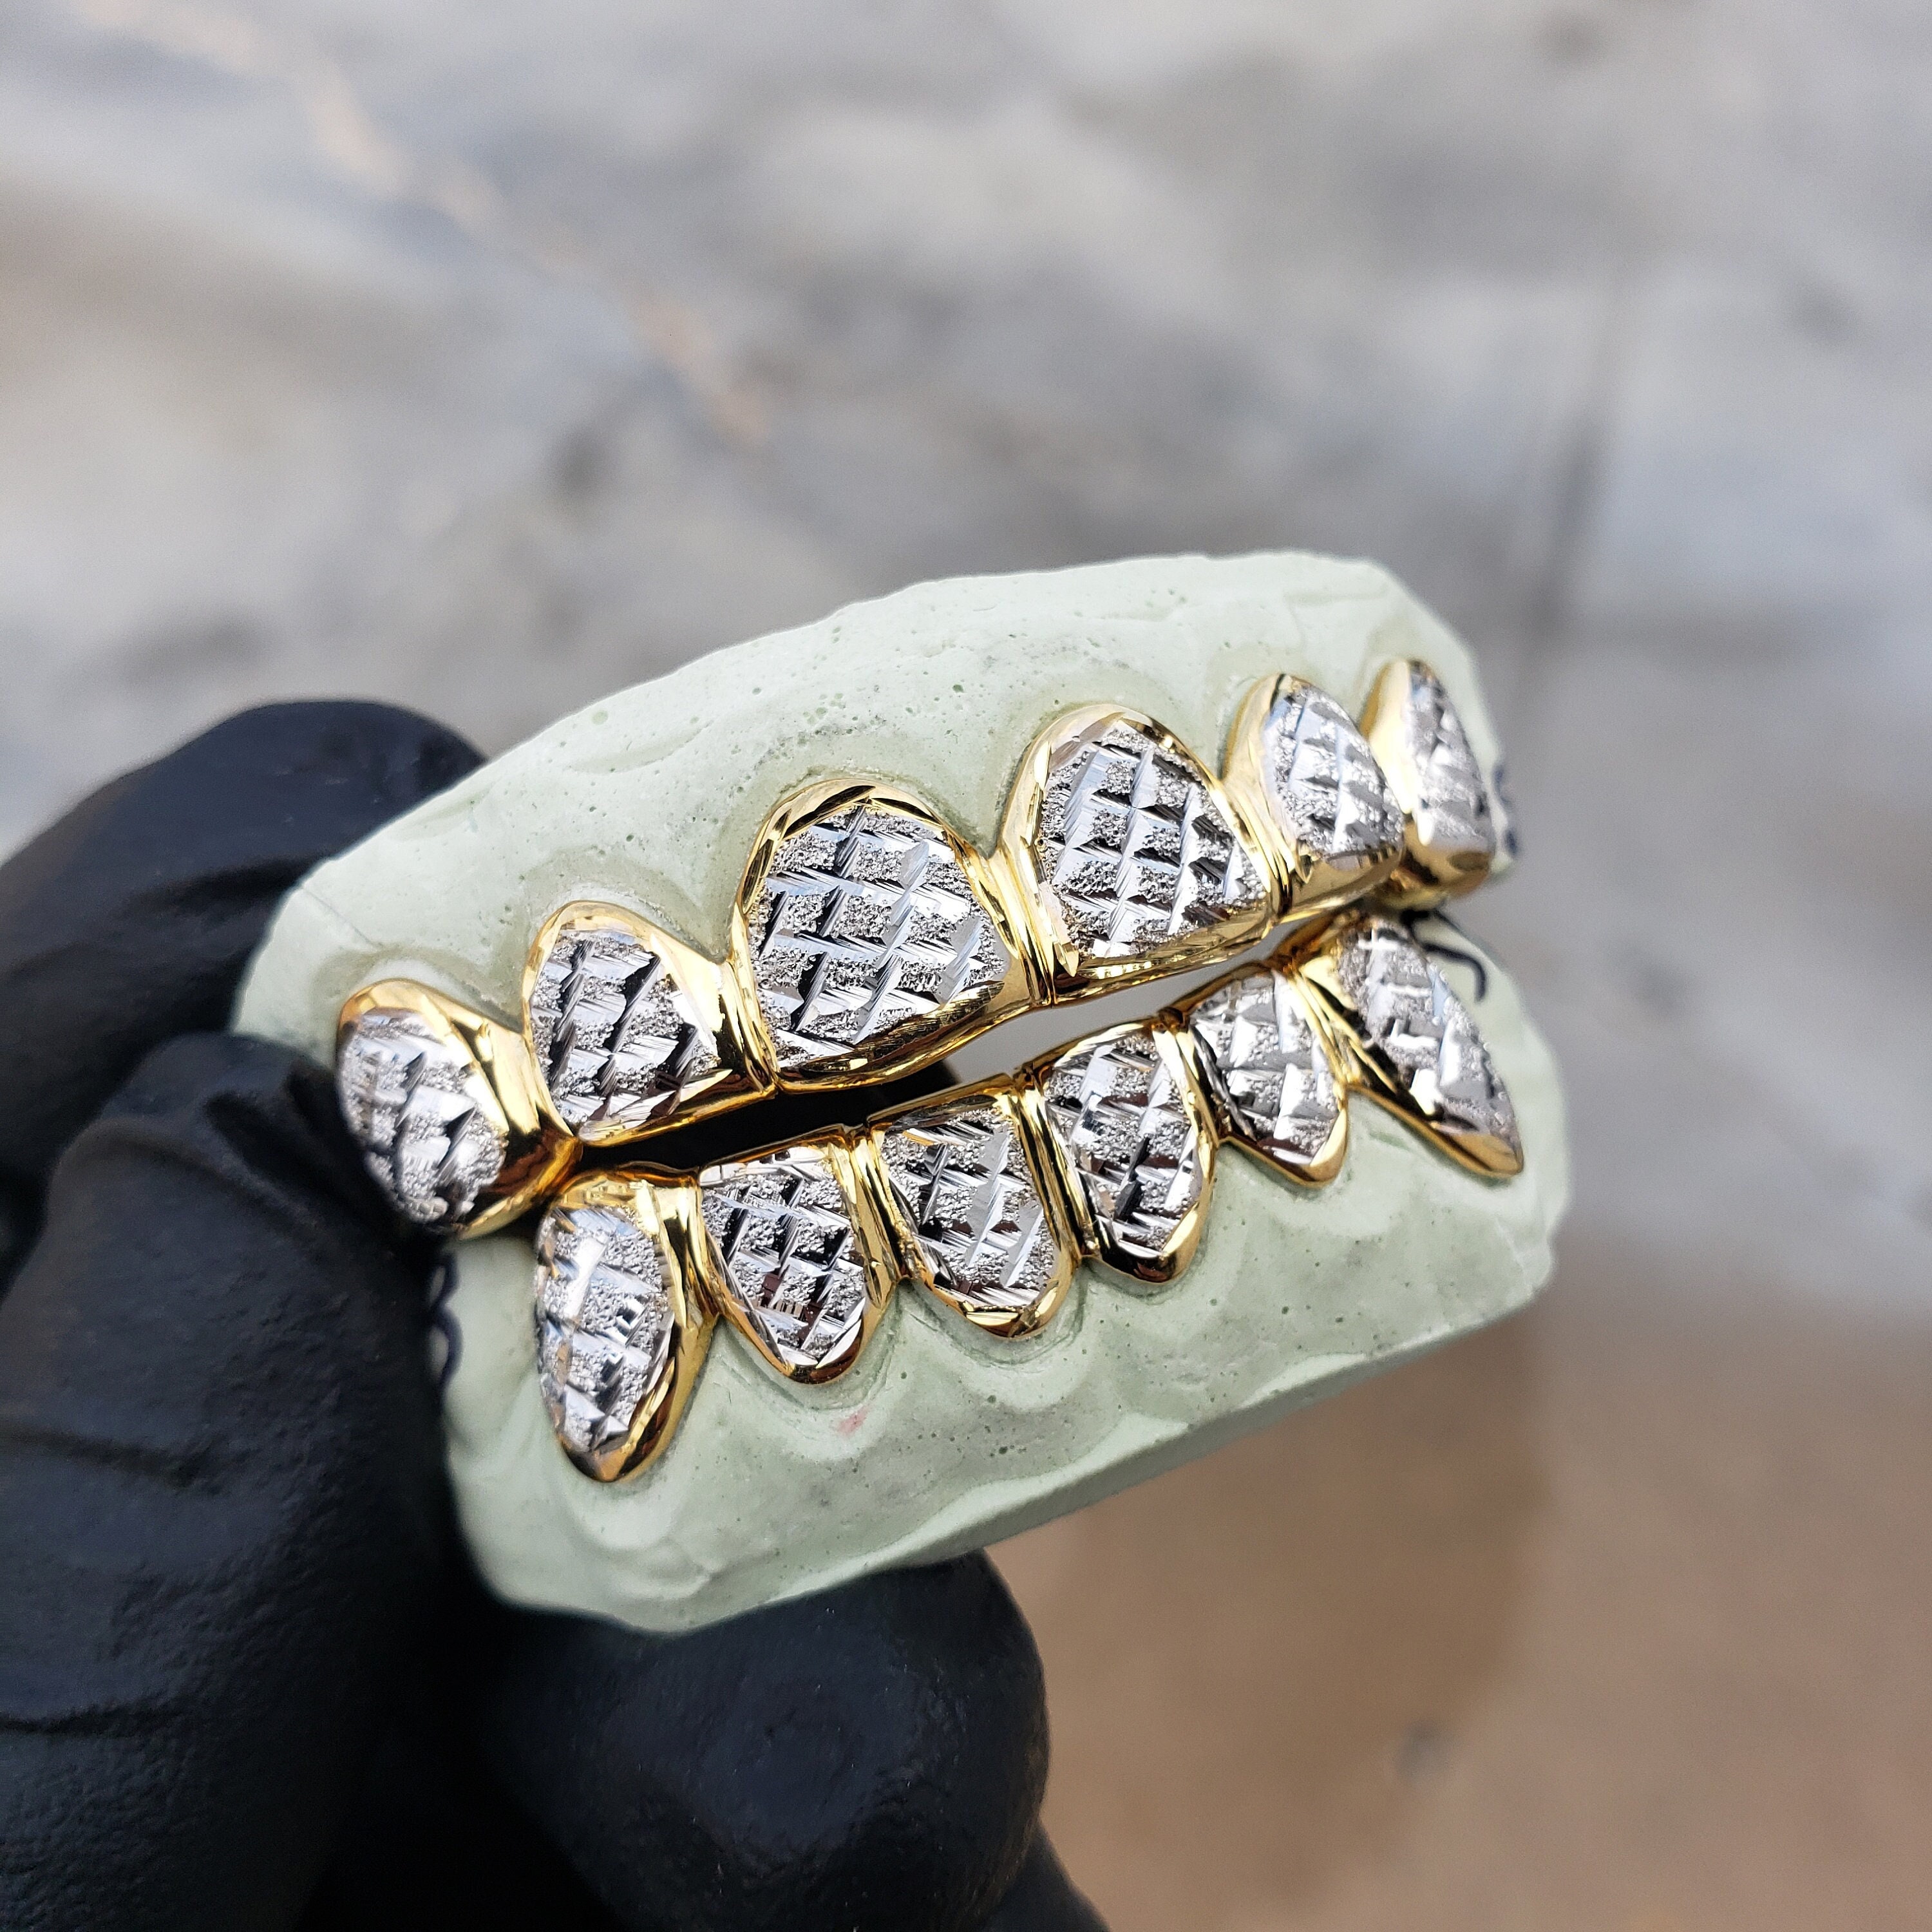 Diamond Dust Silver Set With Perm Cuts – Georgia Gold Grillzz